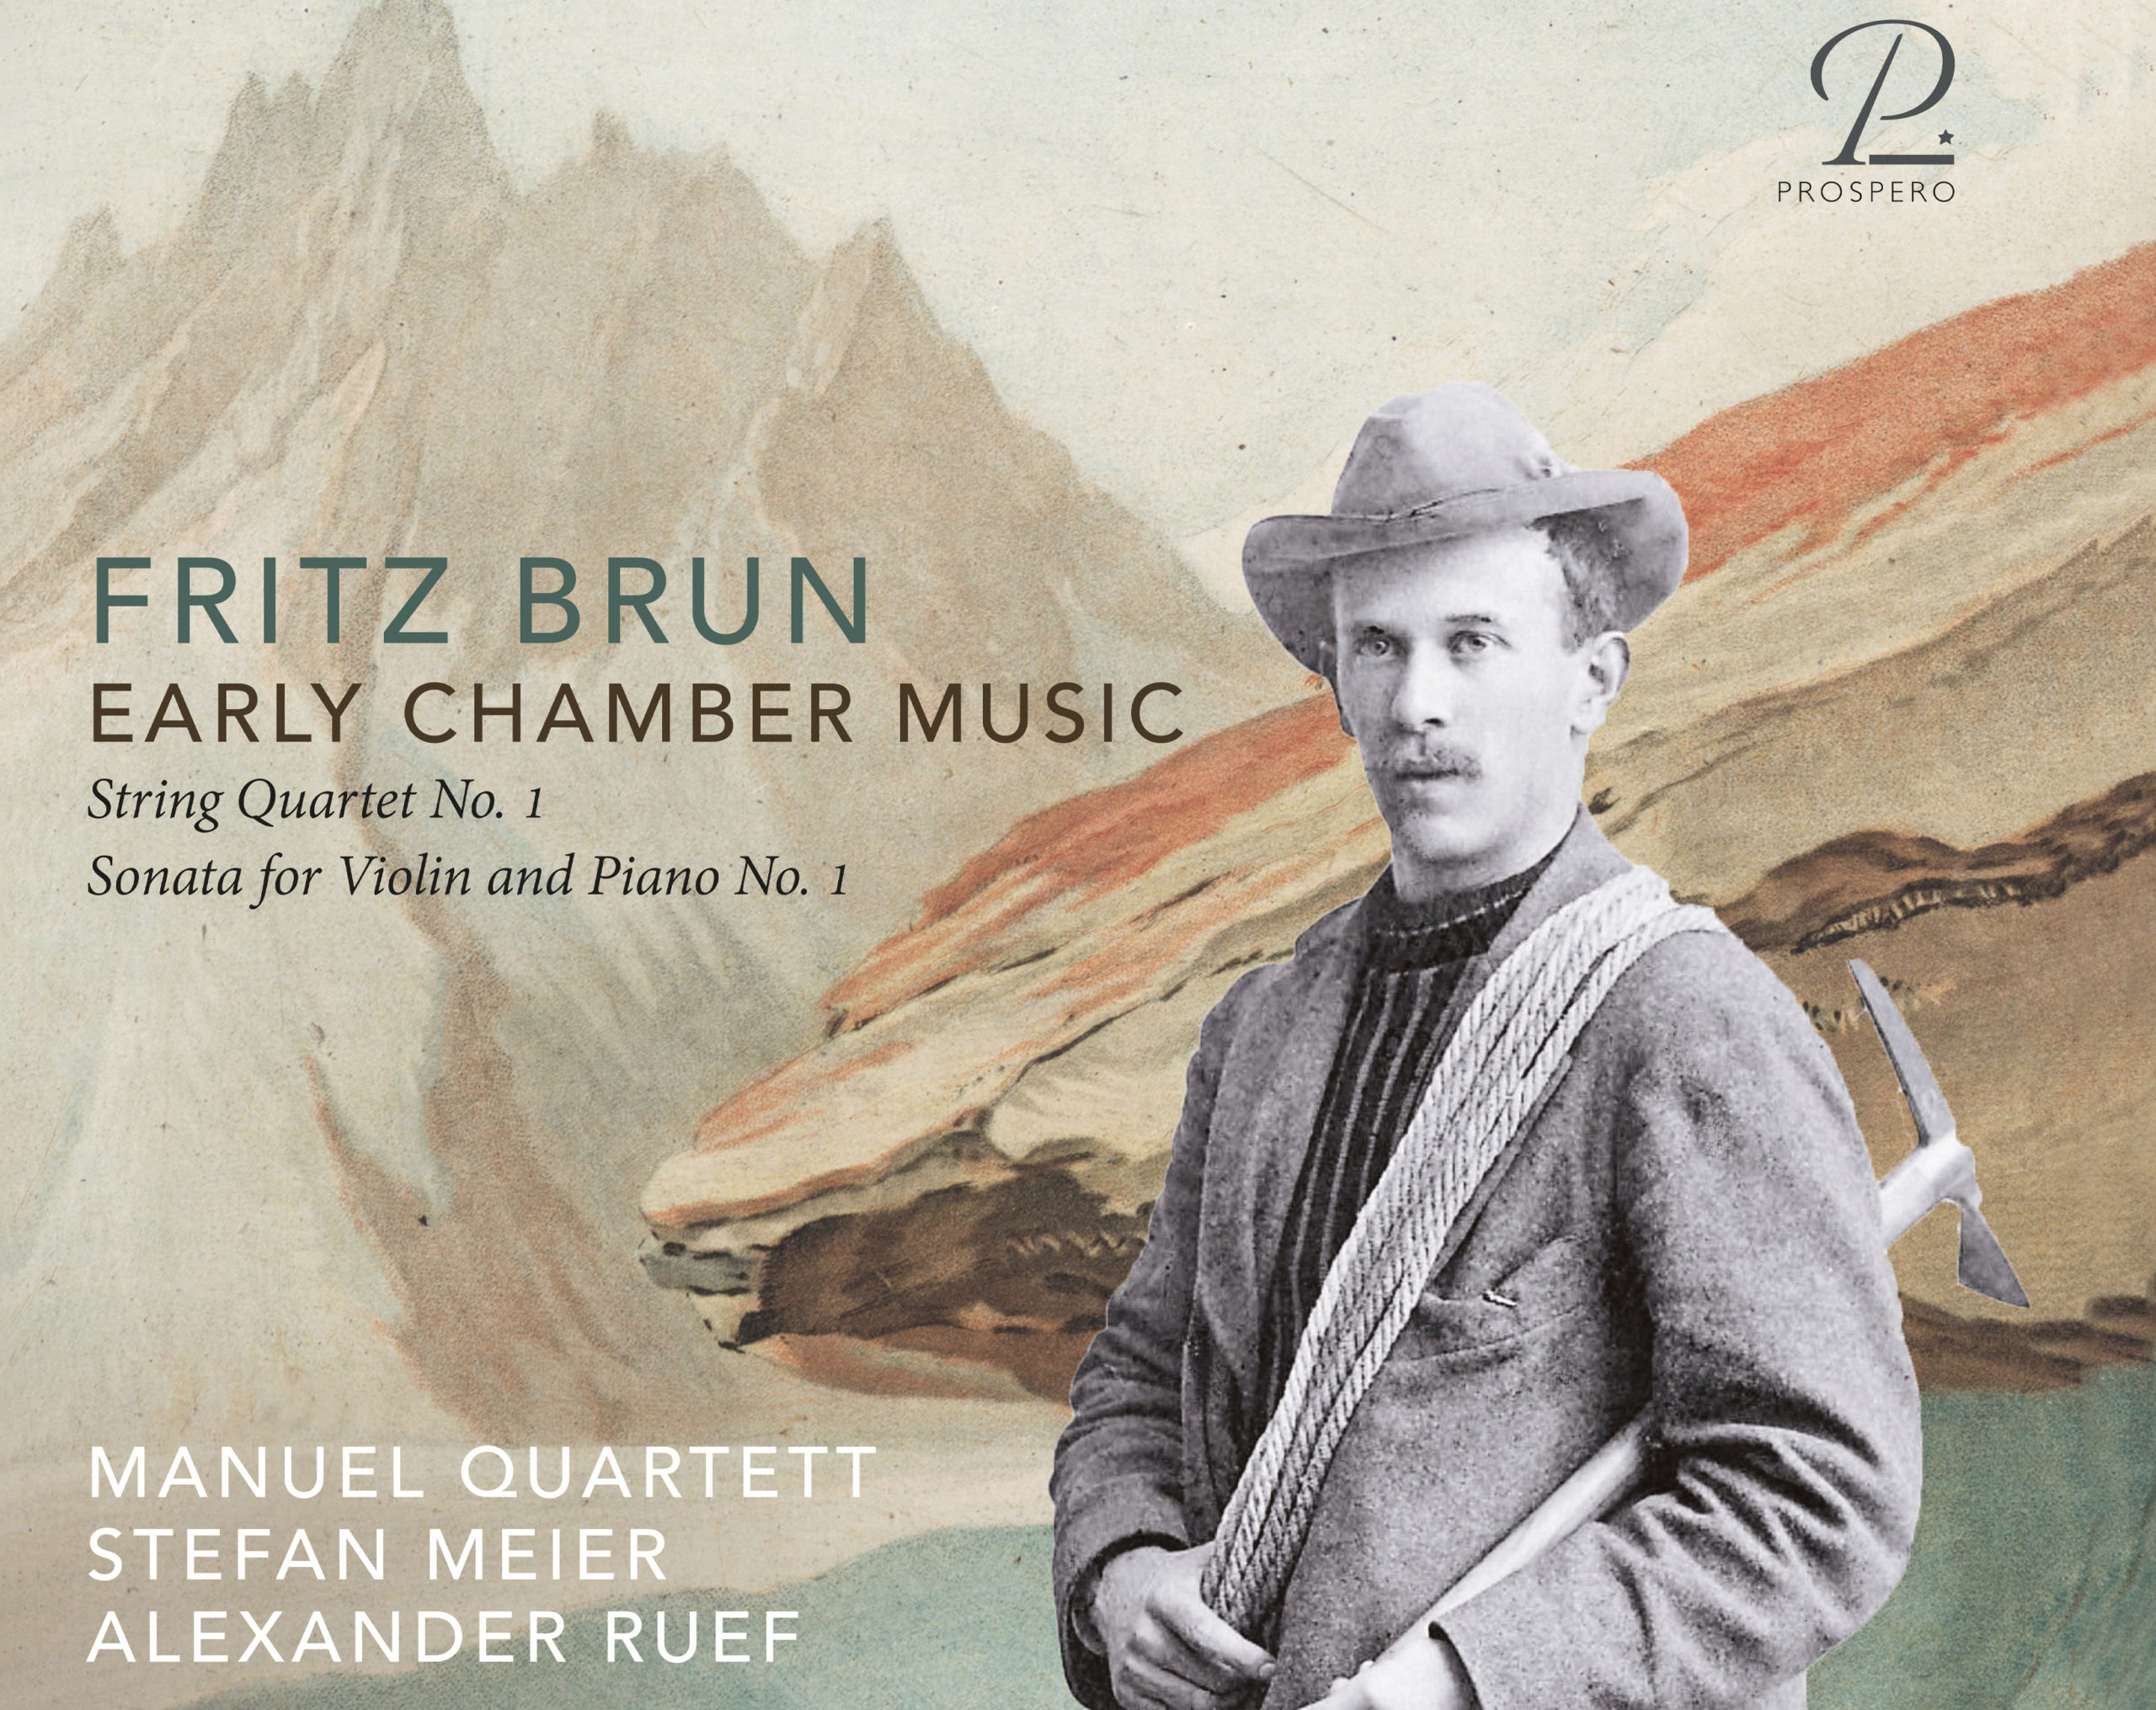 Fritz Brun - Cover Art